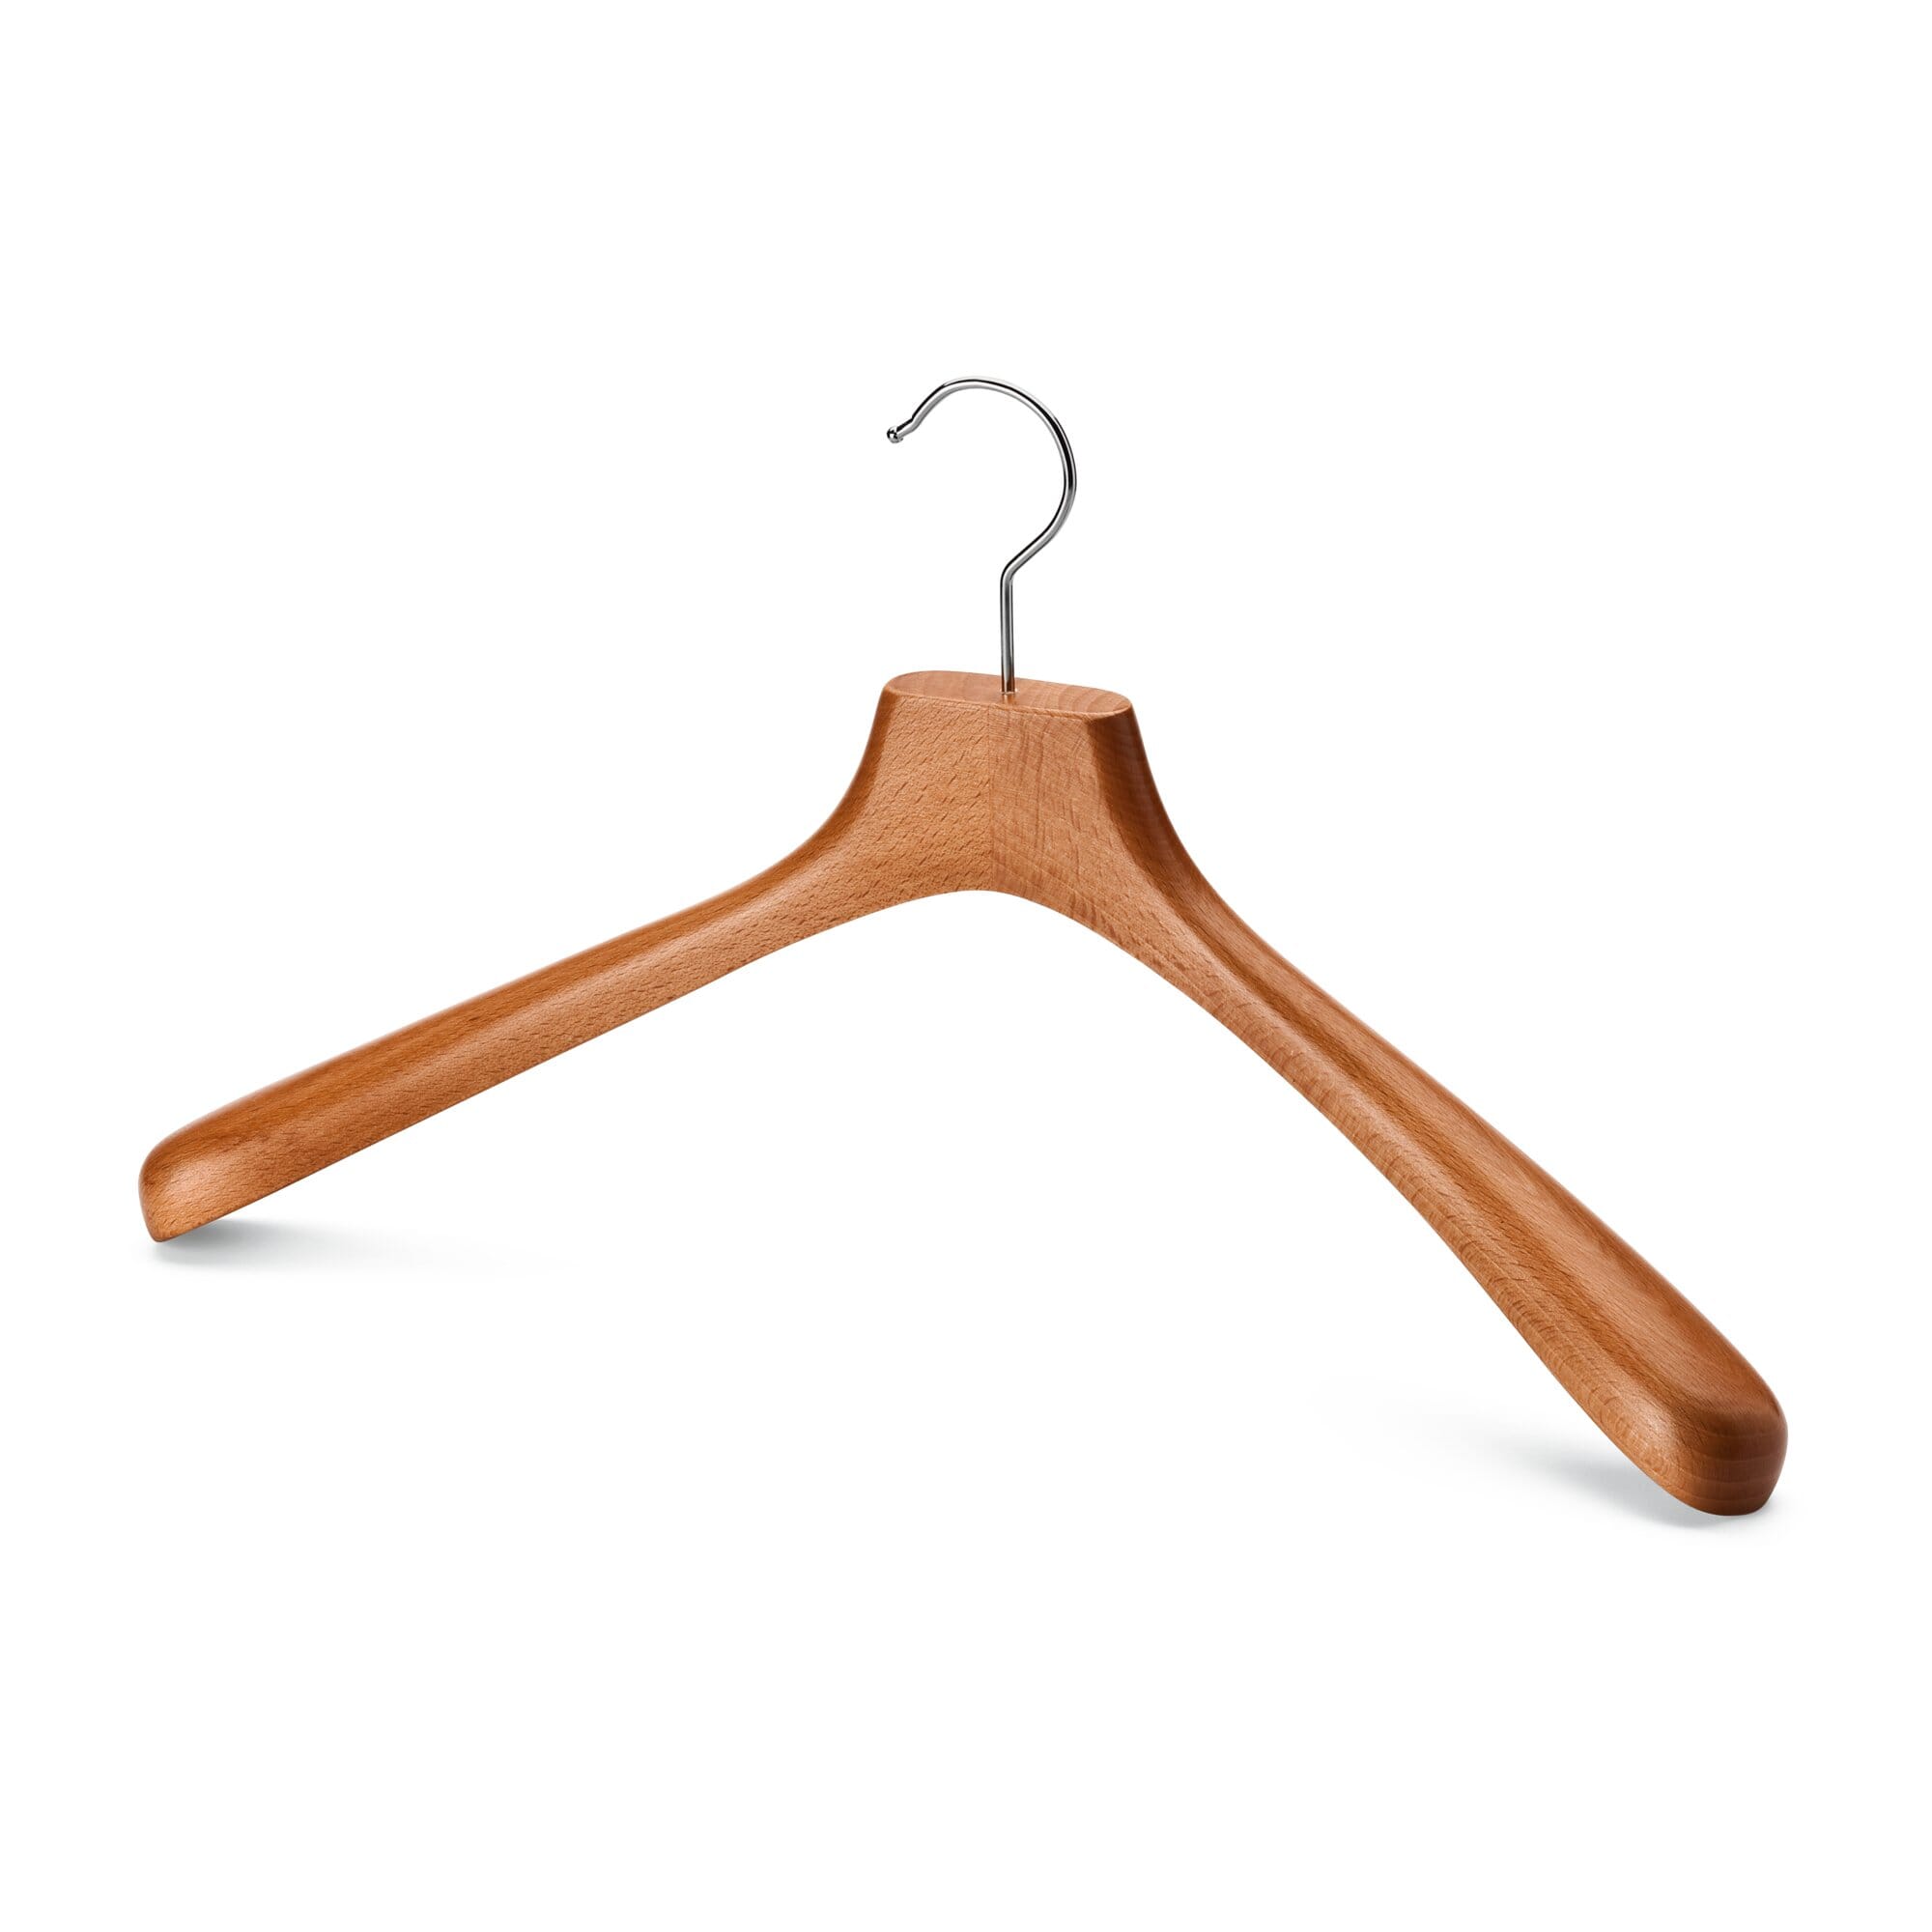 Coat Hangers & Clothes Hangers for All